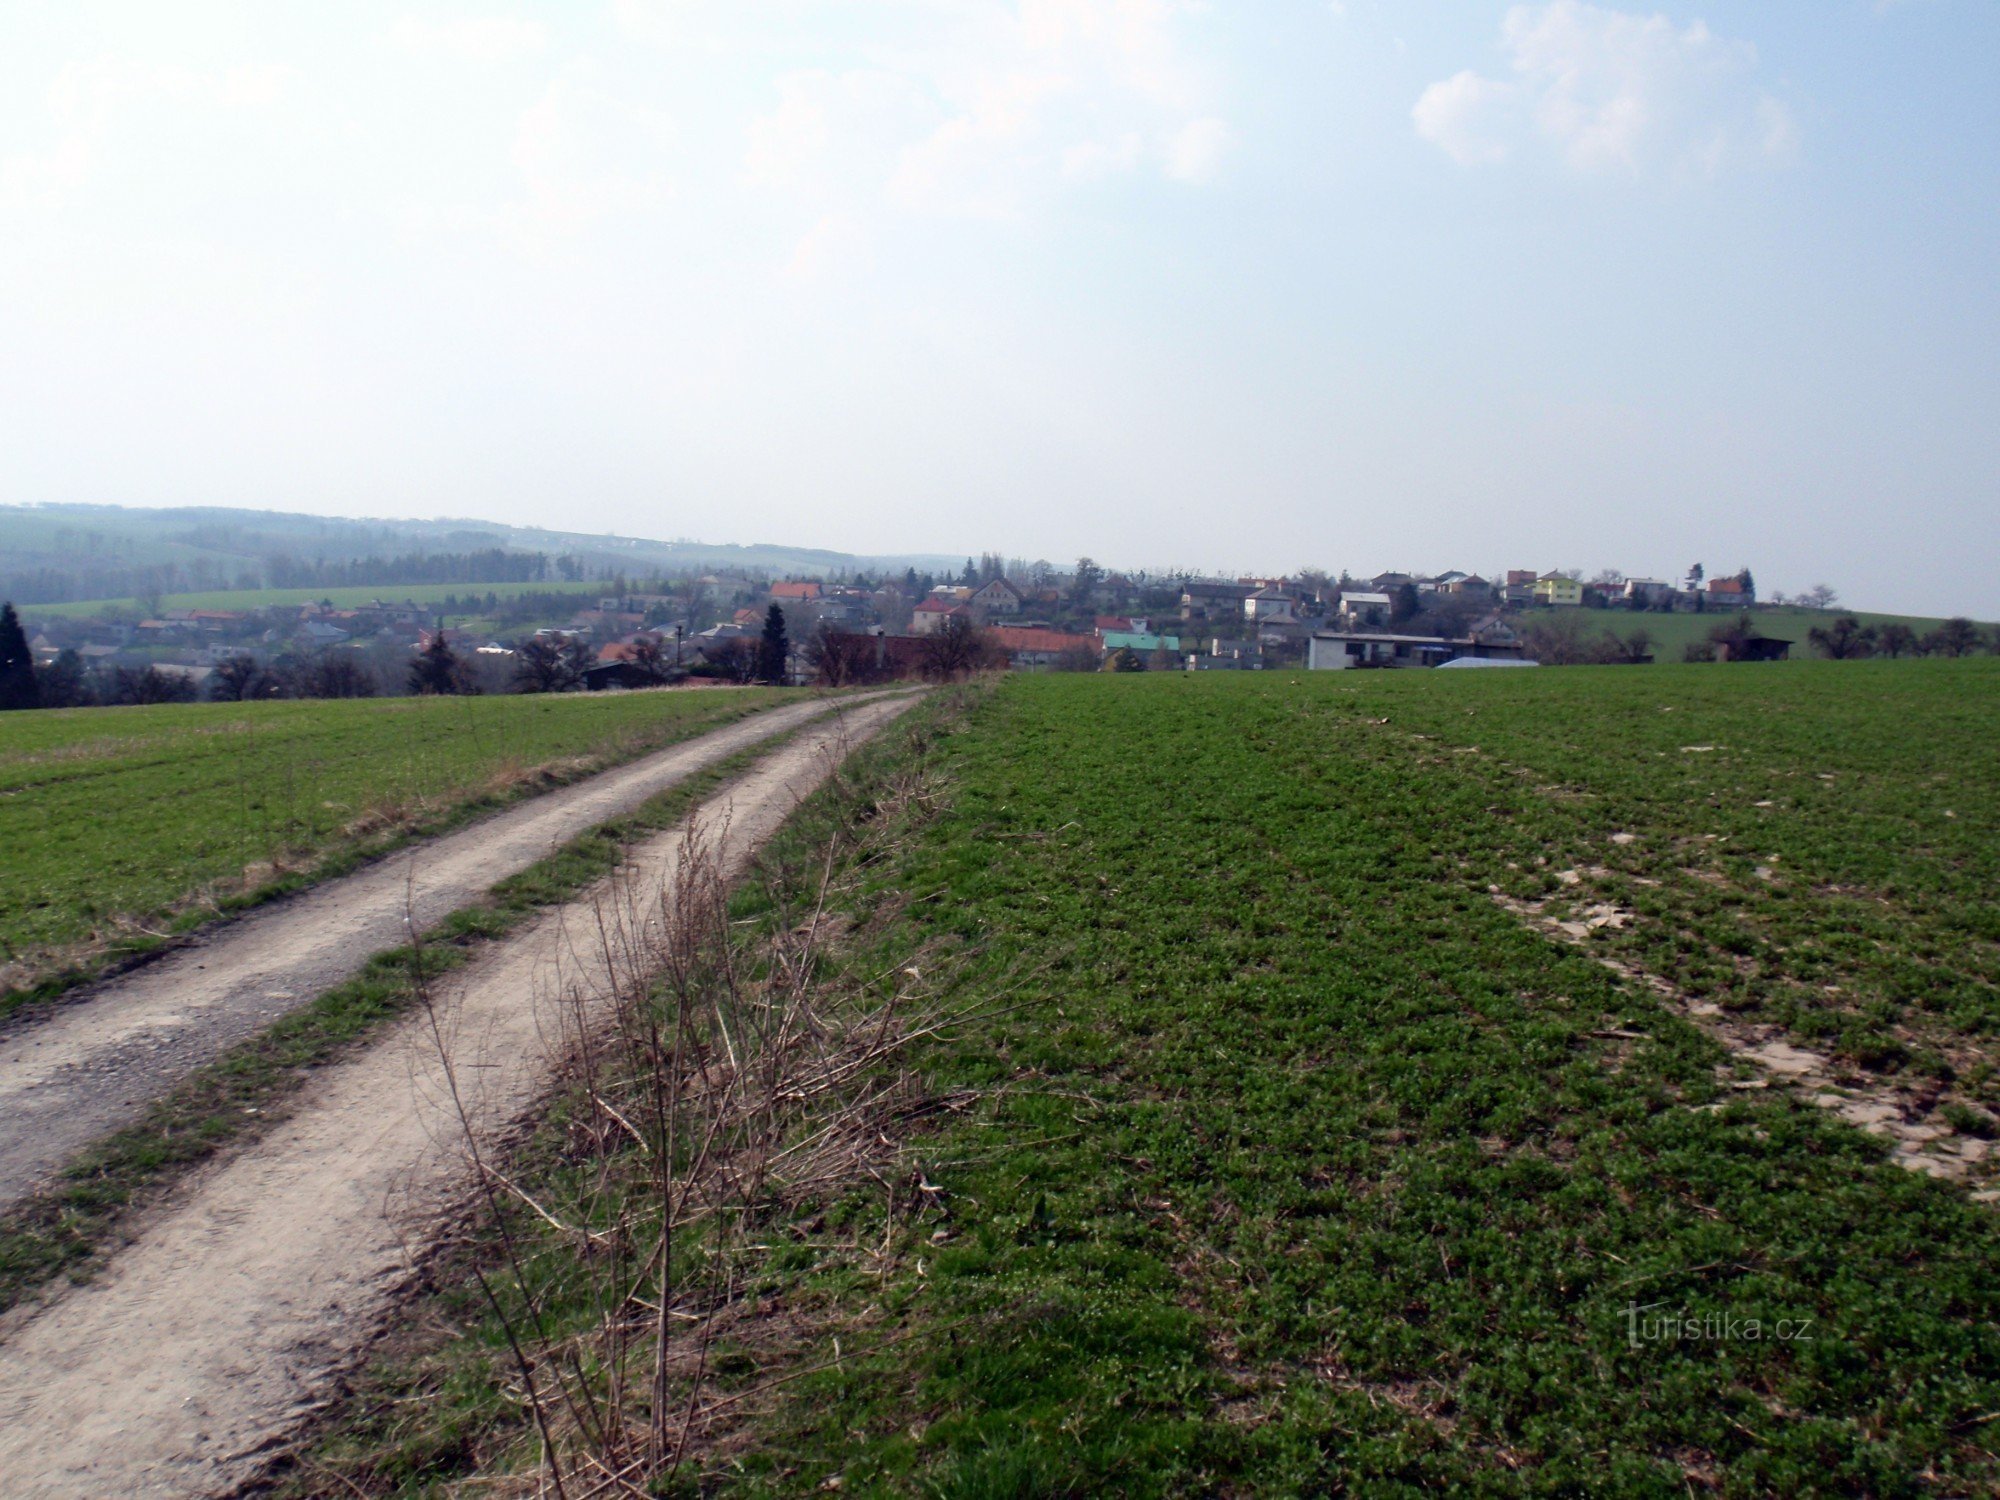 Landsbyen Zbyslavice fra cykelrute 6191